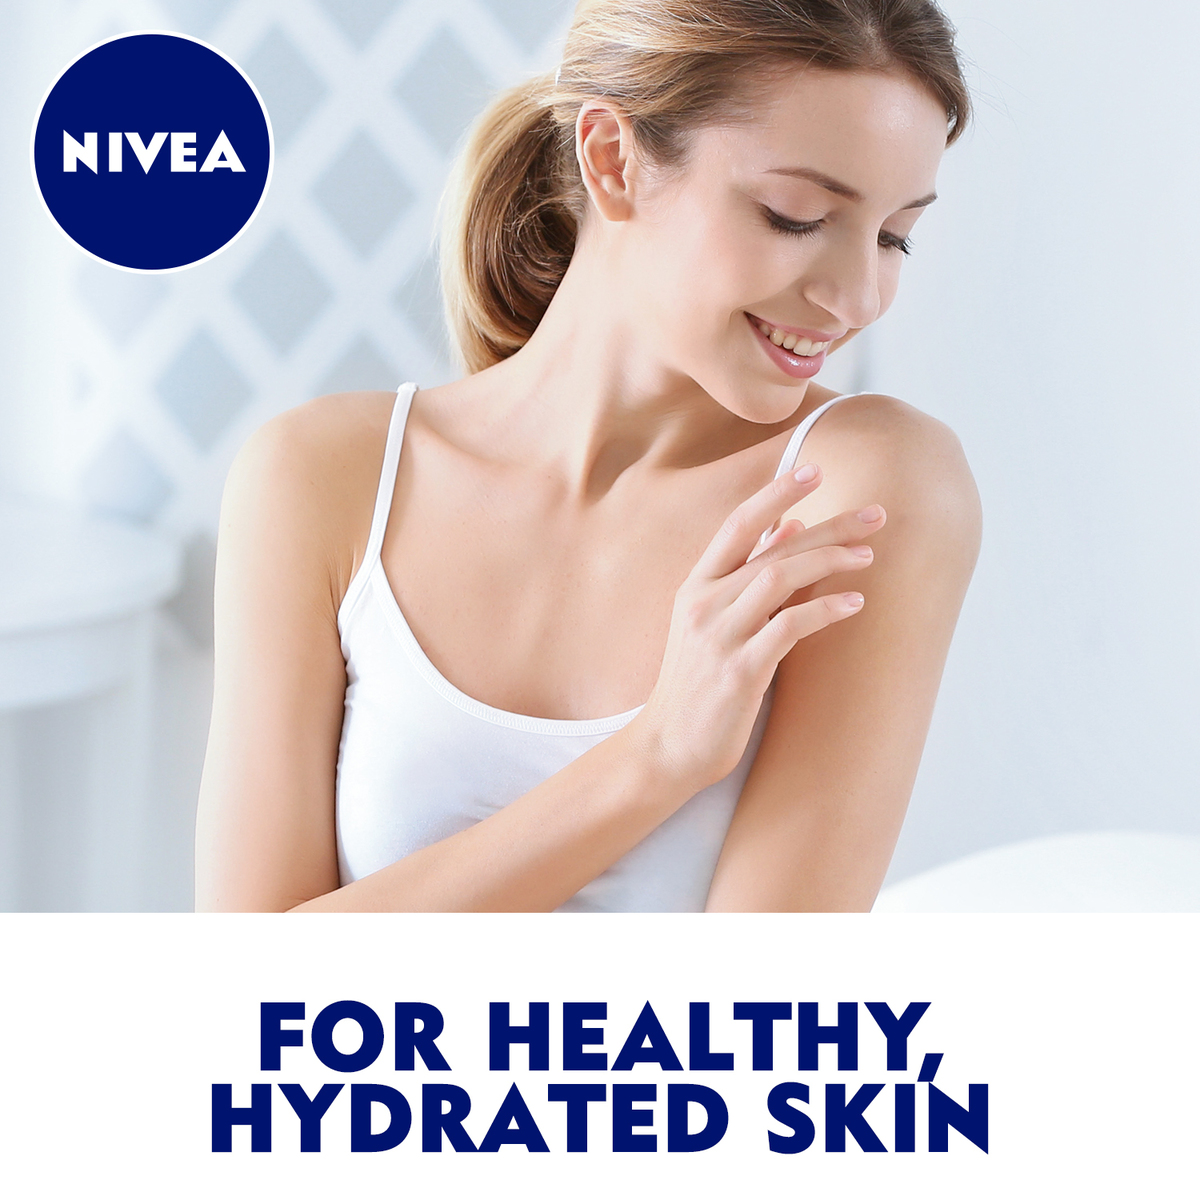 Nivea Body Care Body Lotion Nourishing Dry to Very Dry Skin 625ml